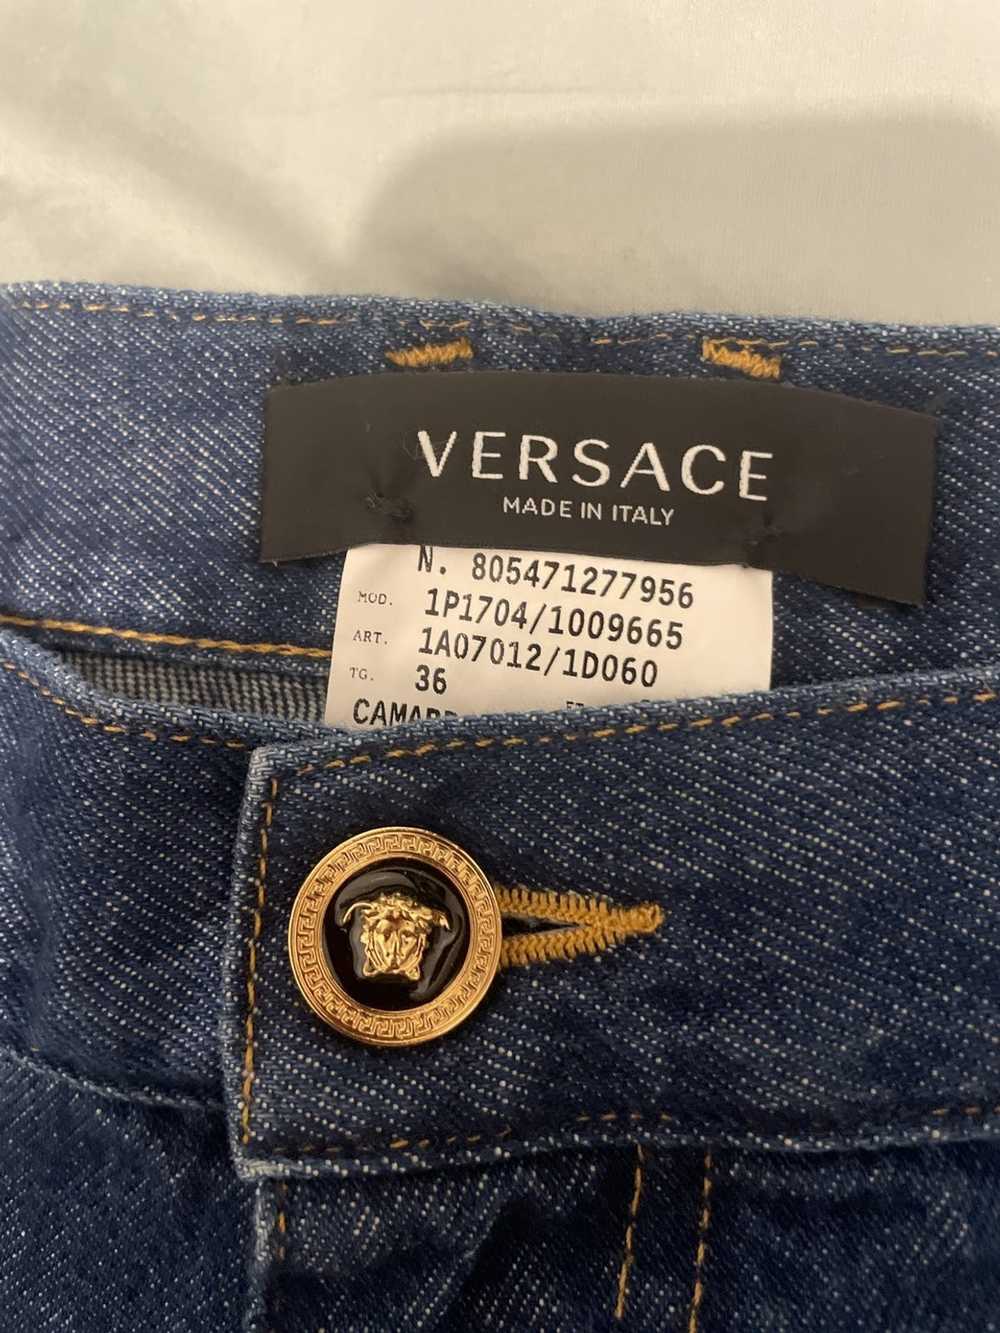 Versace Versace Medusa jeans - image 5